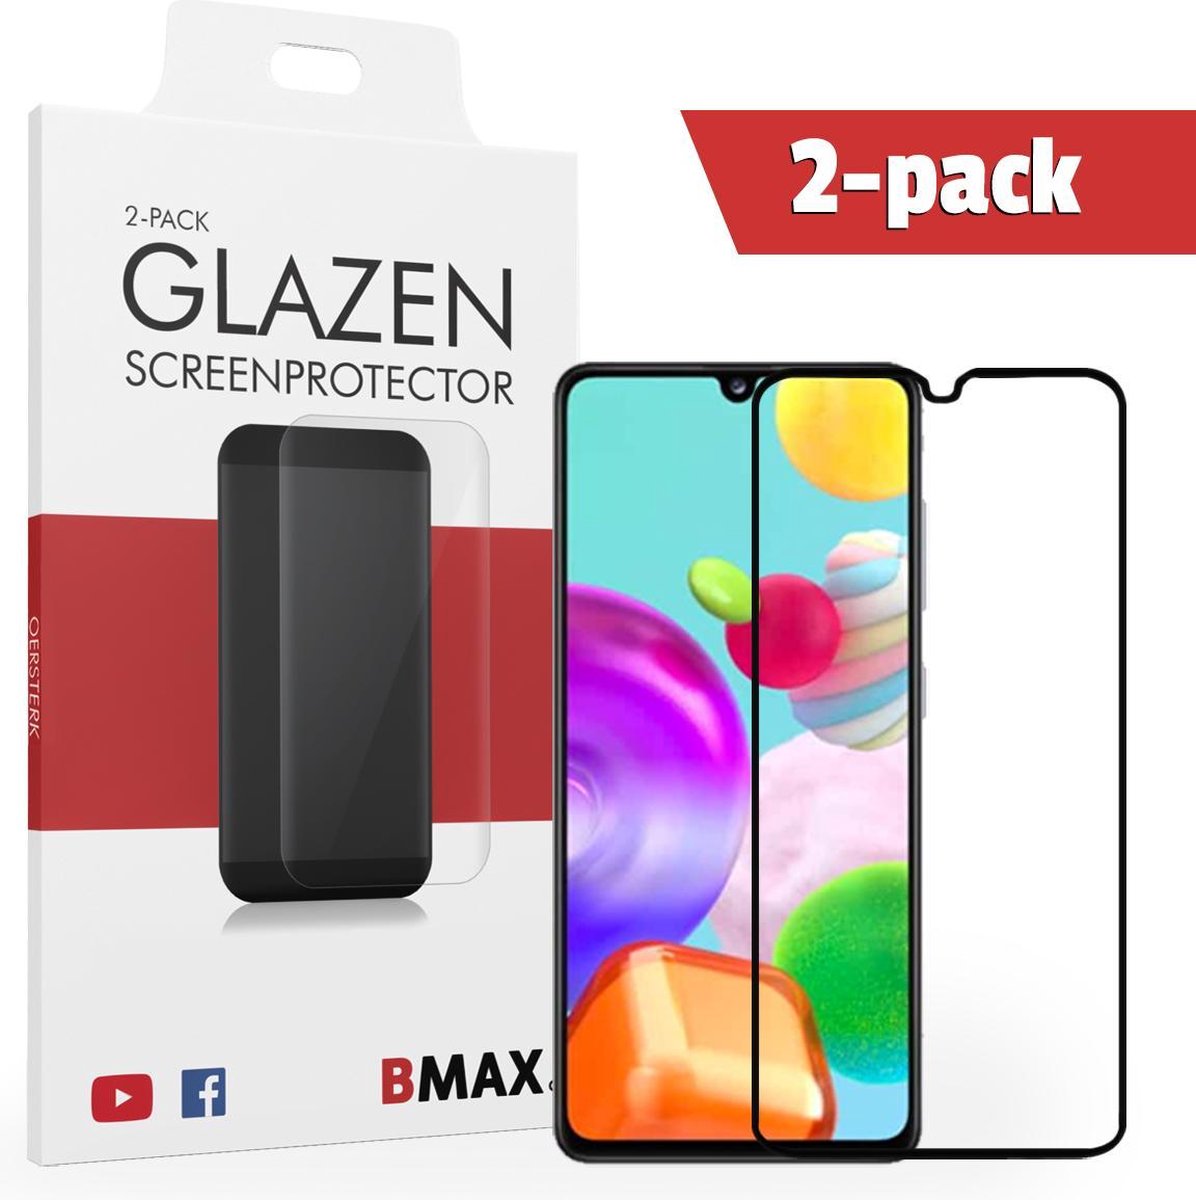 2-pack Bmax Samsung Galaxy A41 Screenprotector - Glass - Full Cover 2.5d - Black